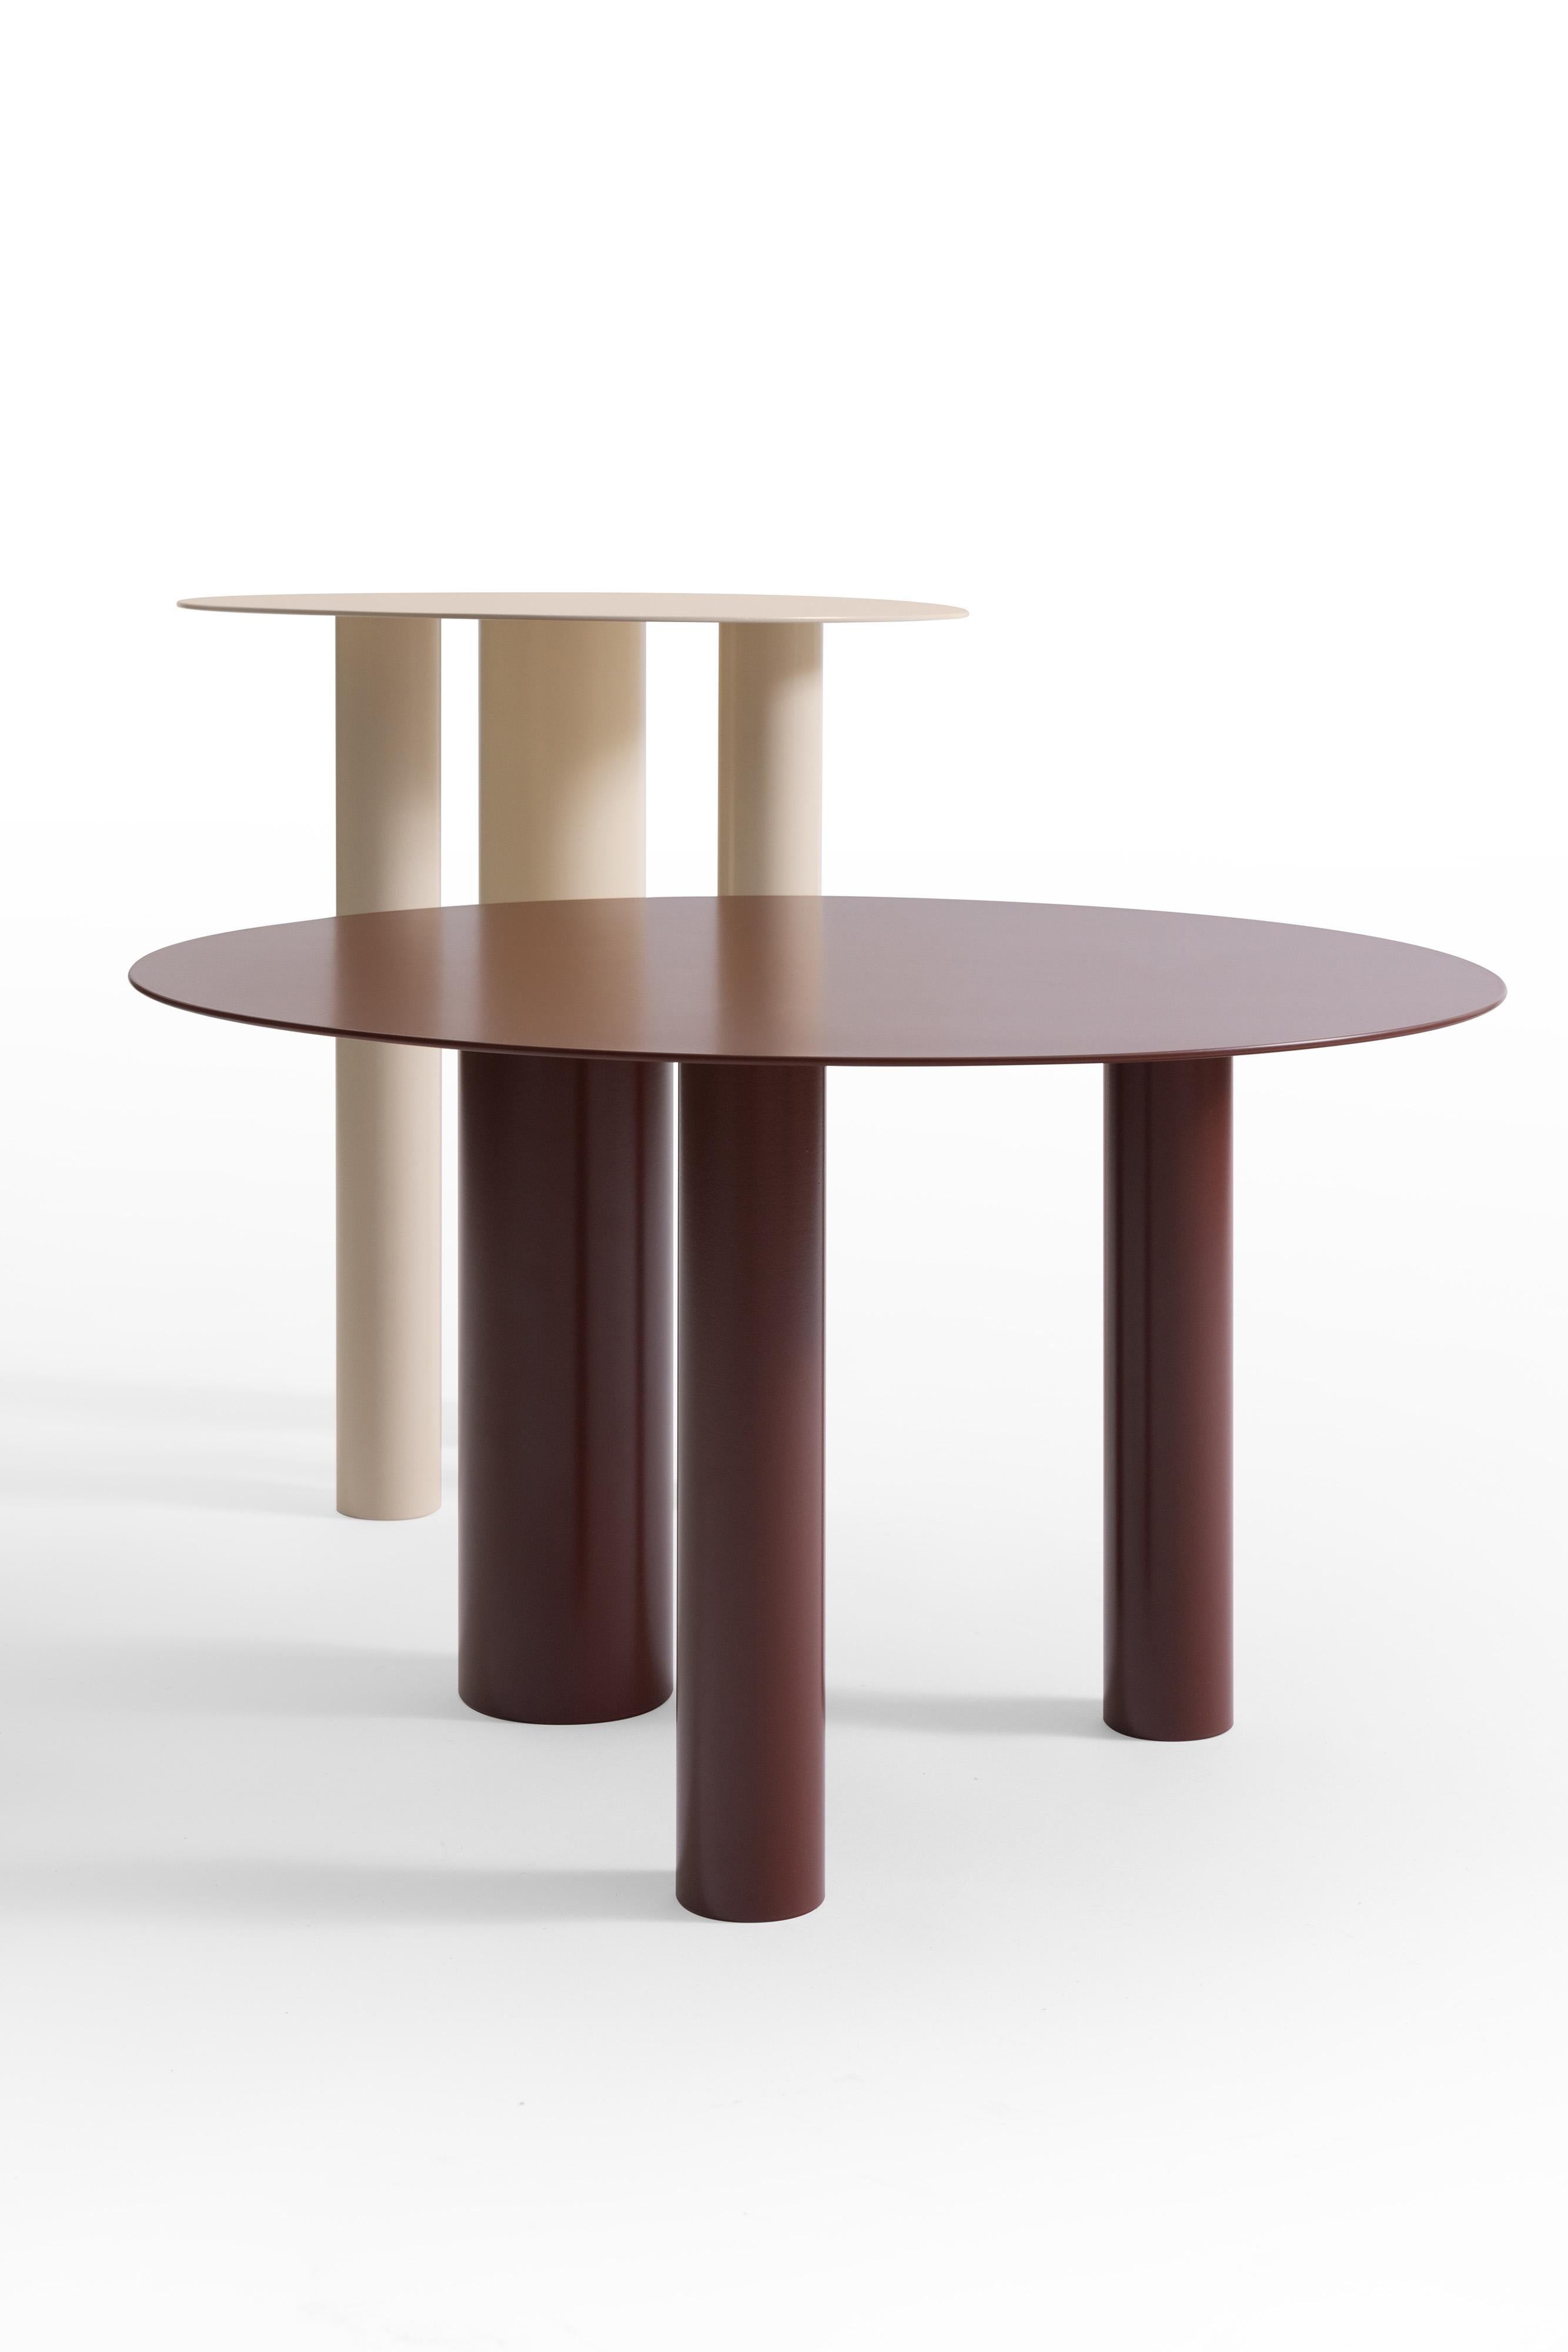 Low Coffee Table Brandt CS2 Made of Painted Steel by Noom 2